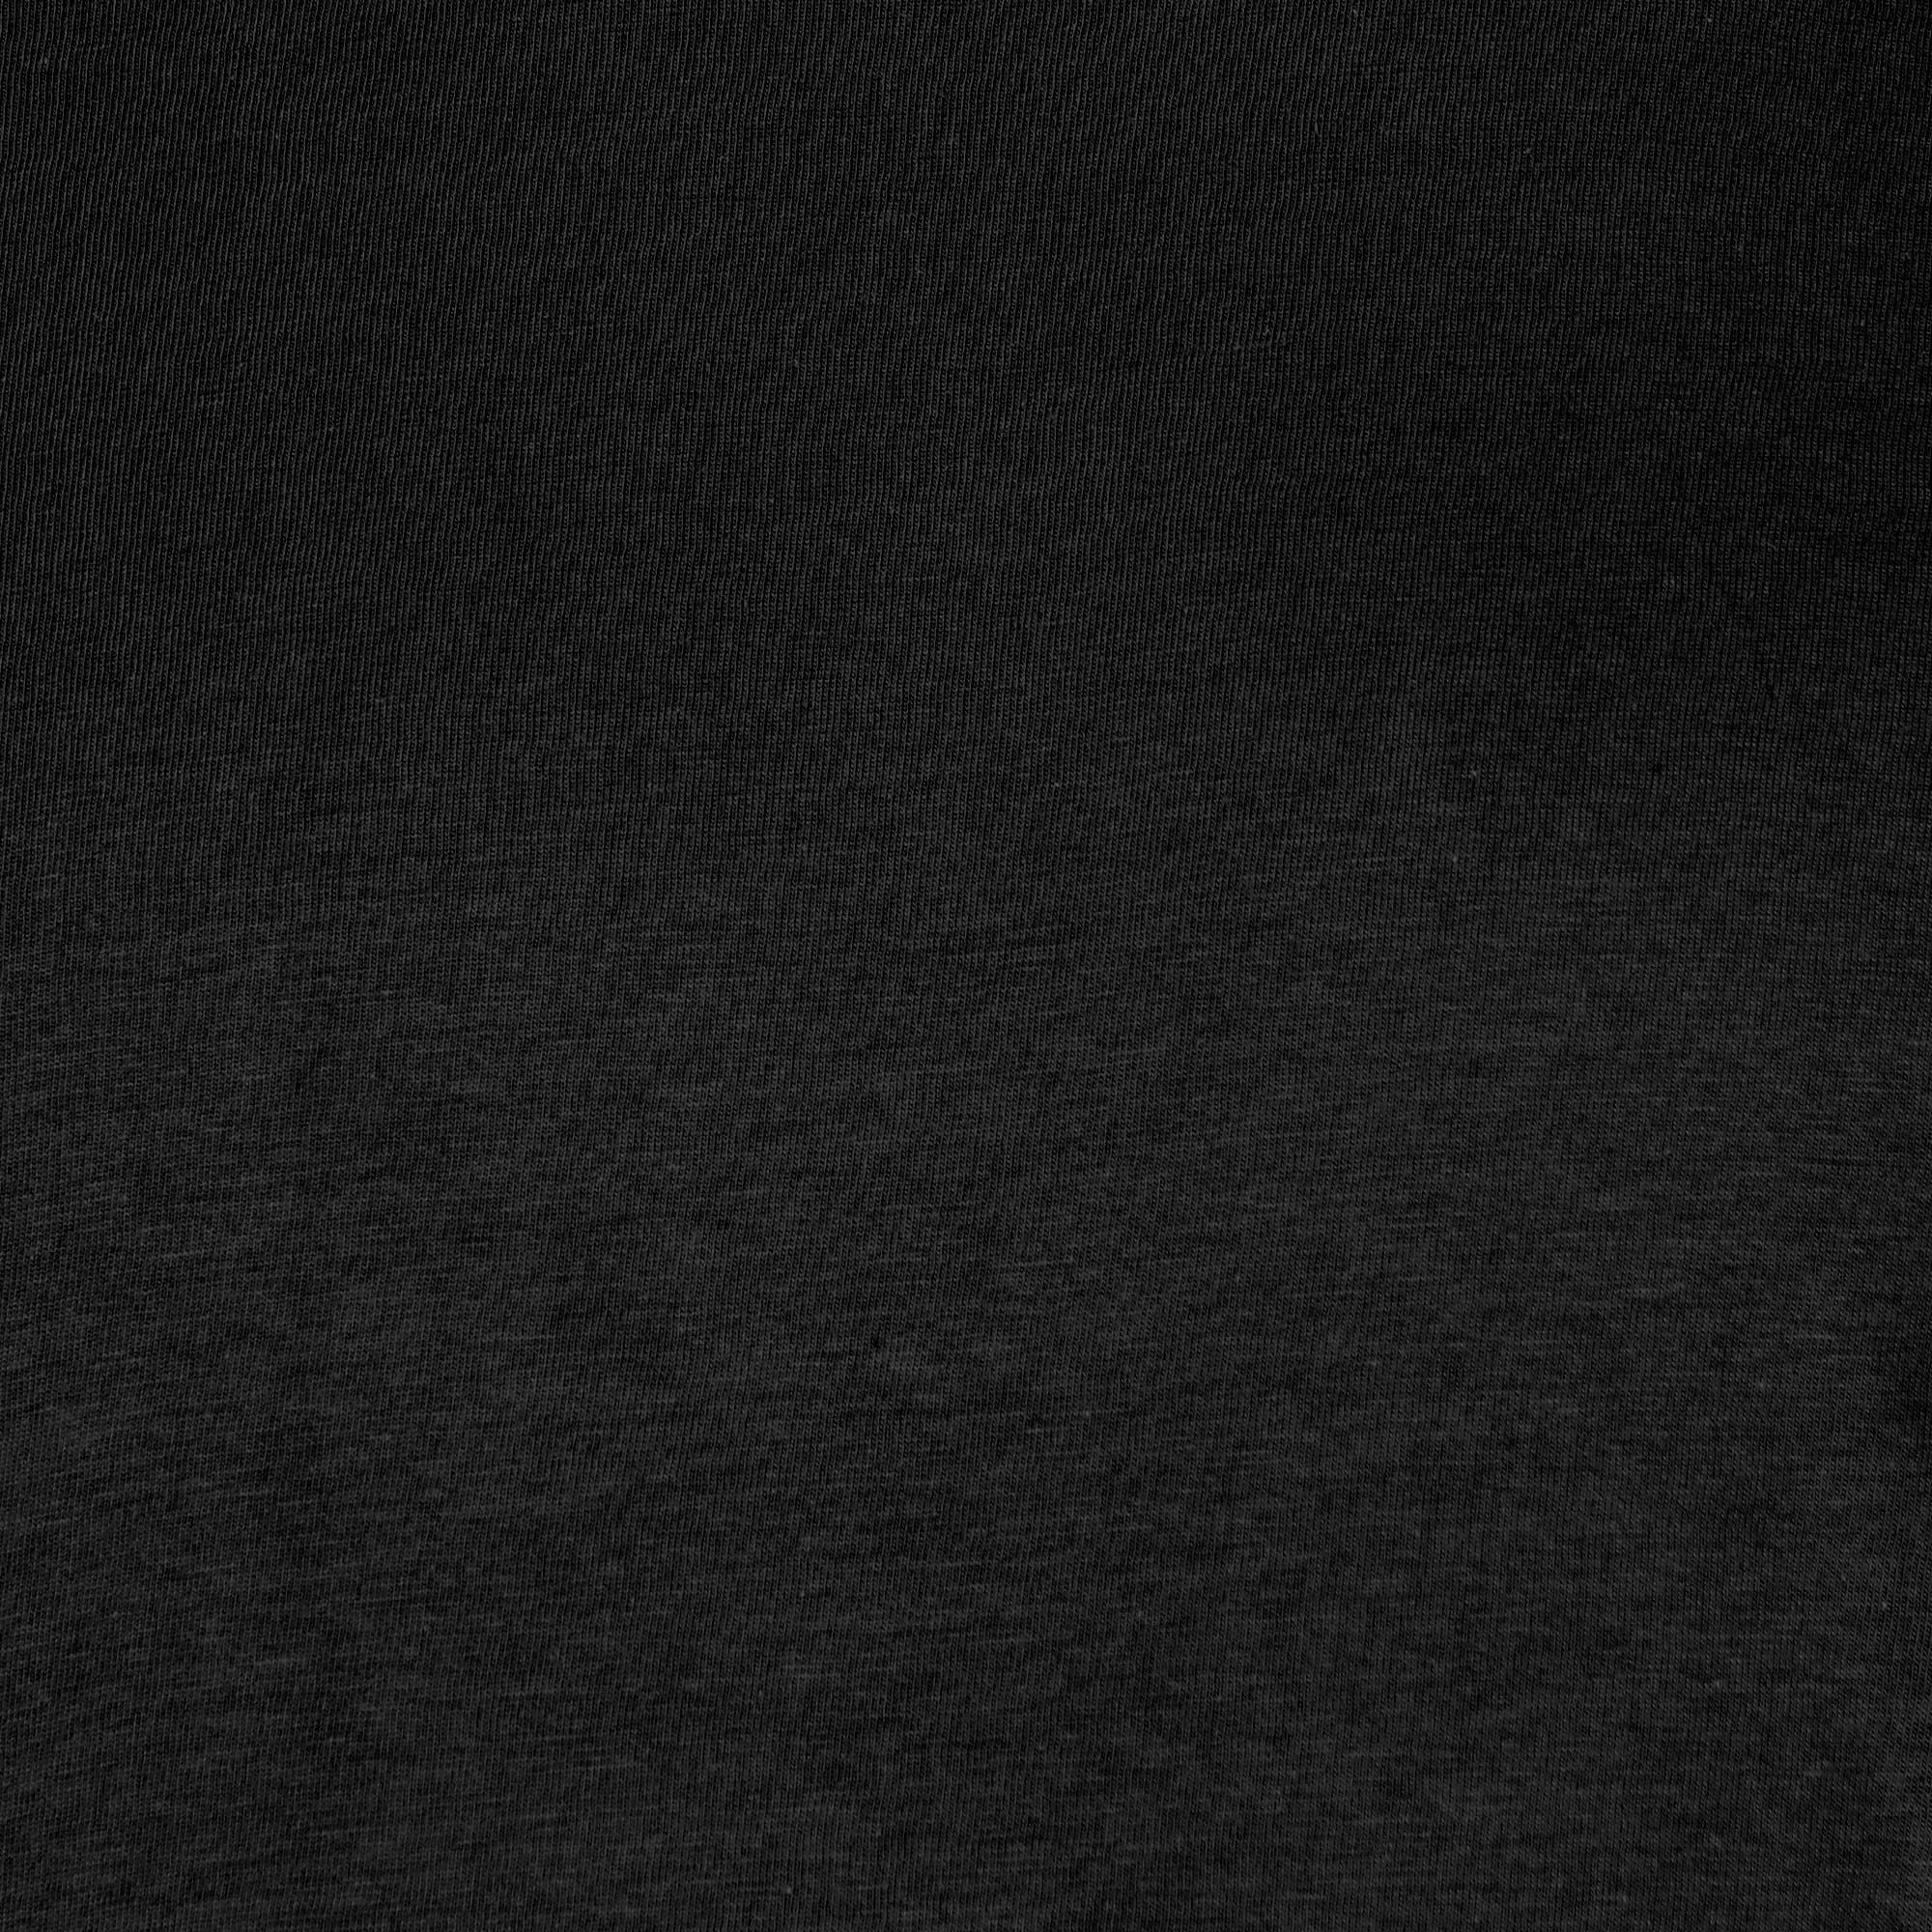 Мужская футболка Diva Teks чёрная (DTD-01), цвет чёрный, размер 44-46 - фото 5